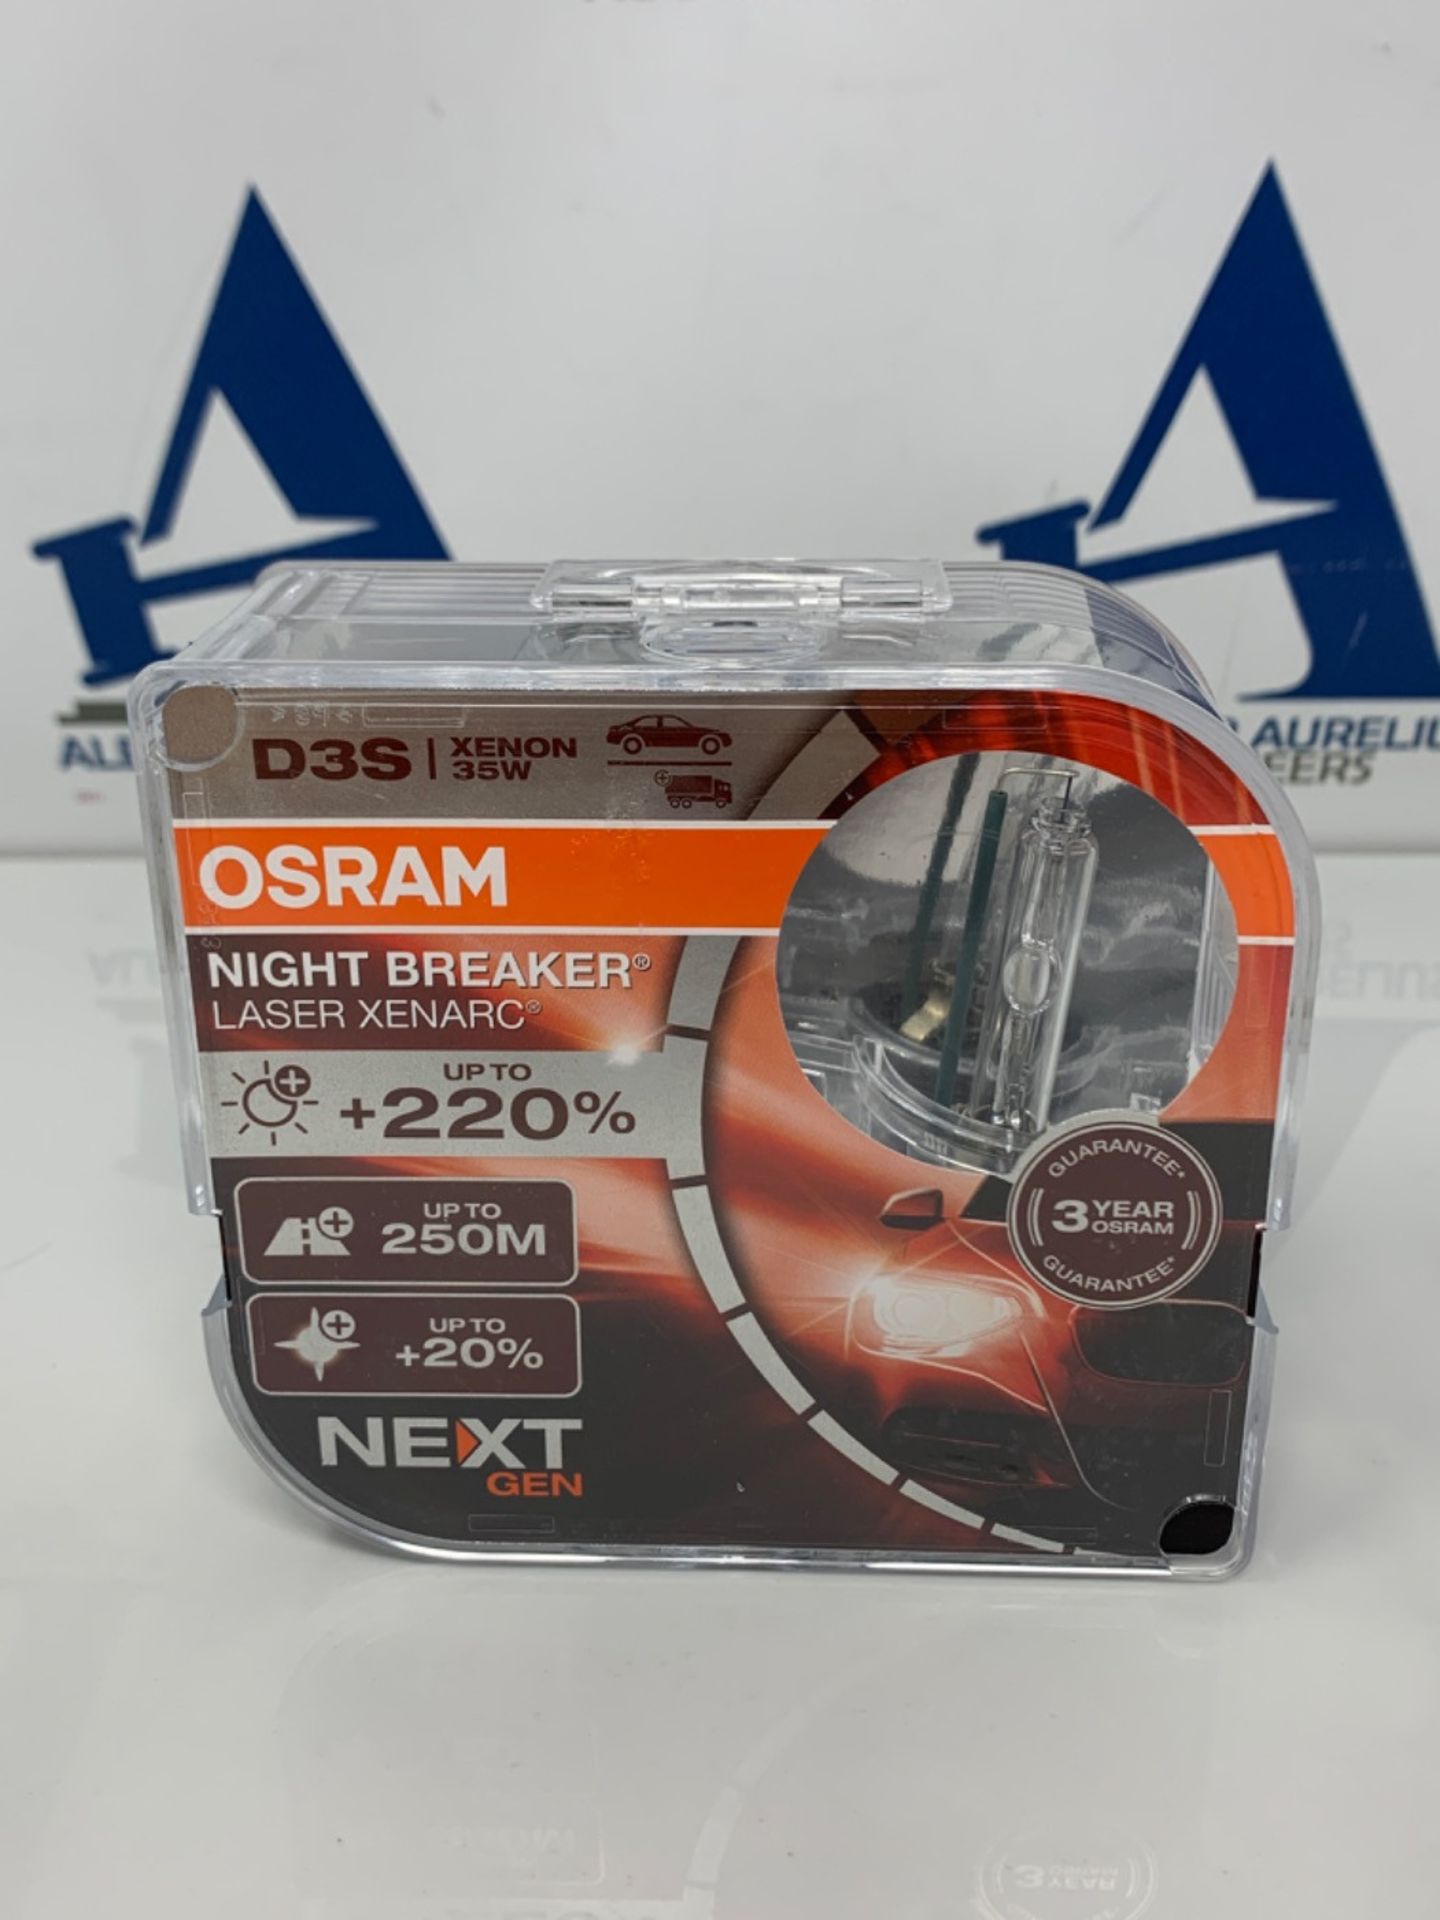 RRP £151.00 OSRAM XENARC NIGHT BREAKER LASER D3S, Next Generation, 220% more brightness, HID xenon - Image 2 of 3